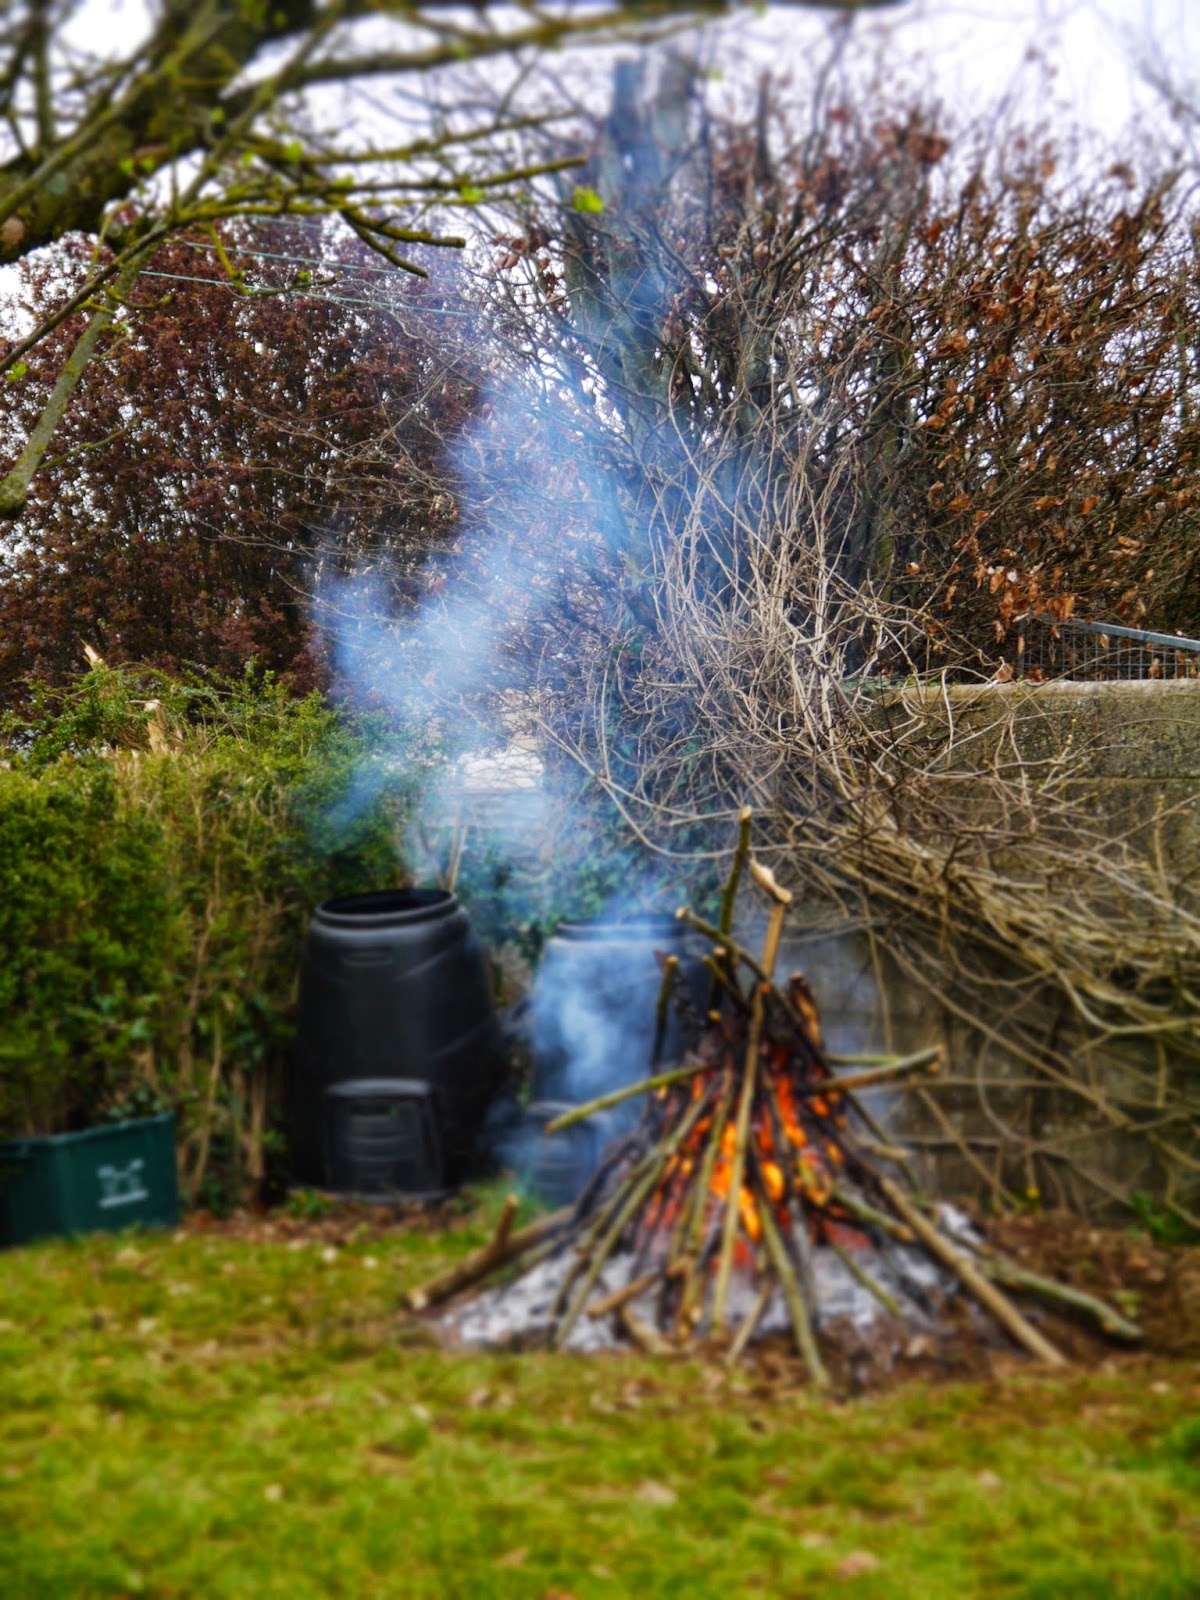 Burning twigs in a bonfire